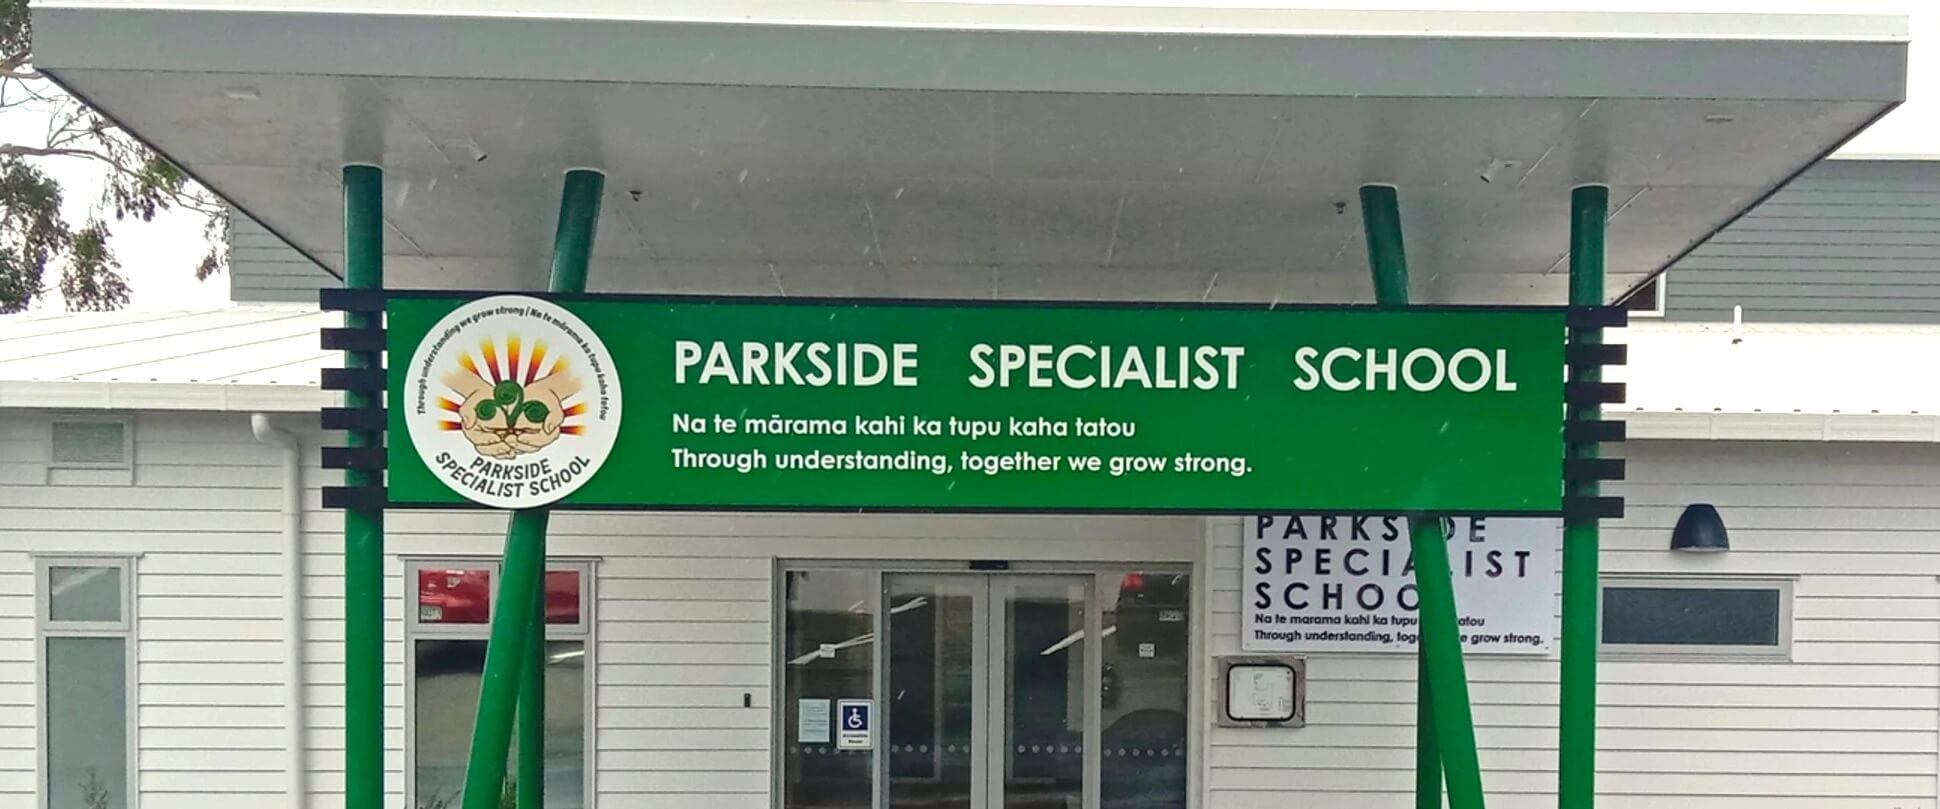 Parkside Specialist School